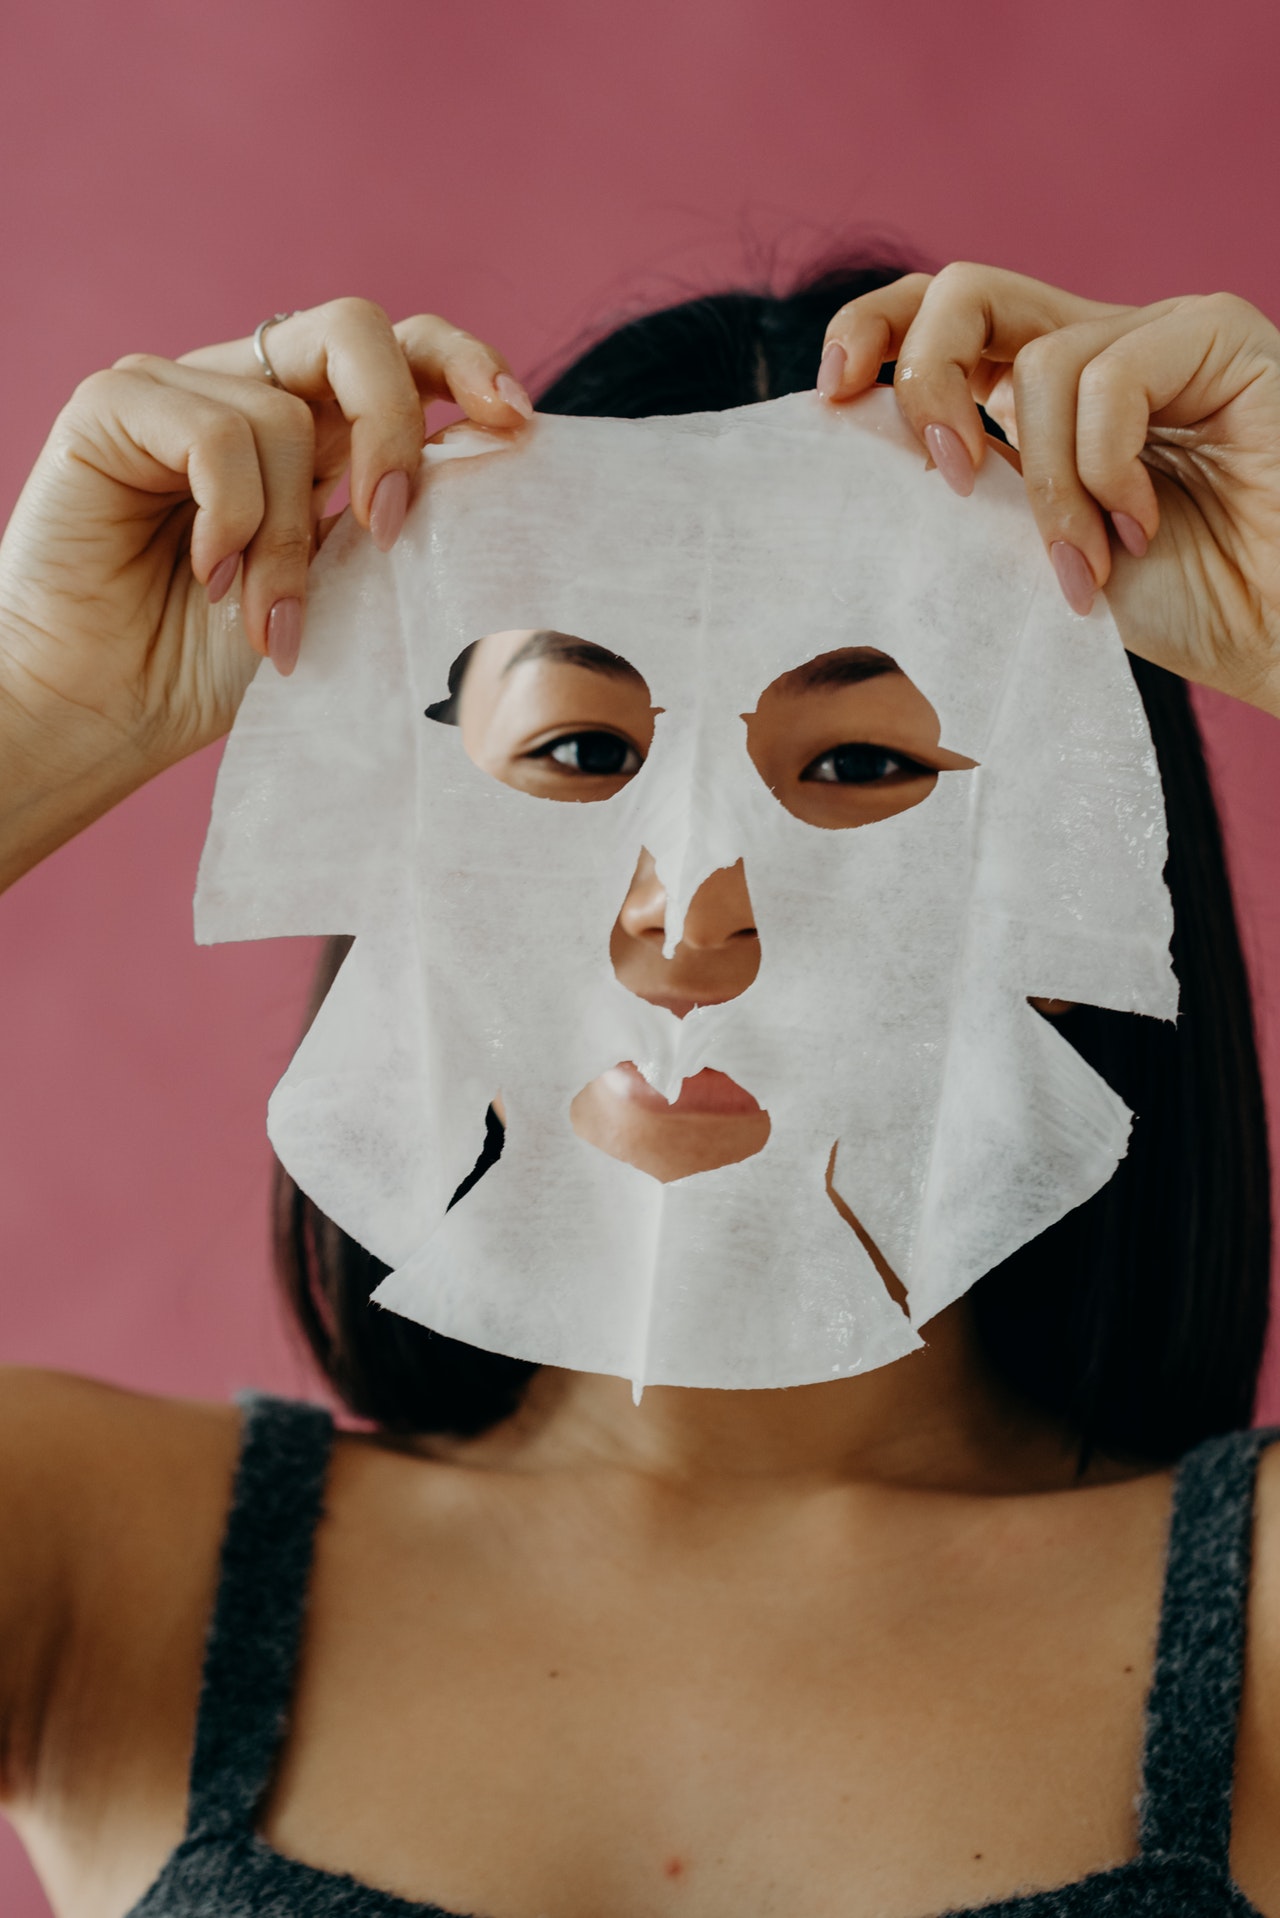 Korean sheet face masks. Popular skincare. Photo Polina Kovaleva, Pexels